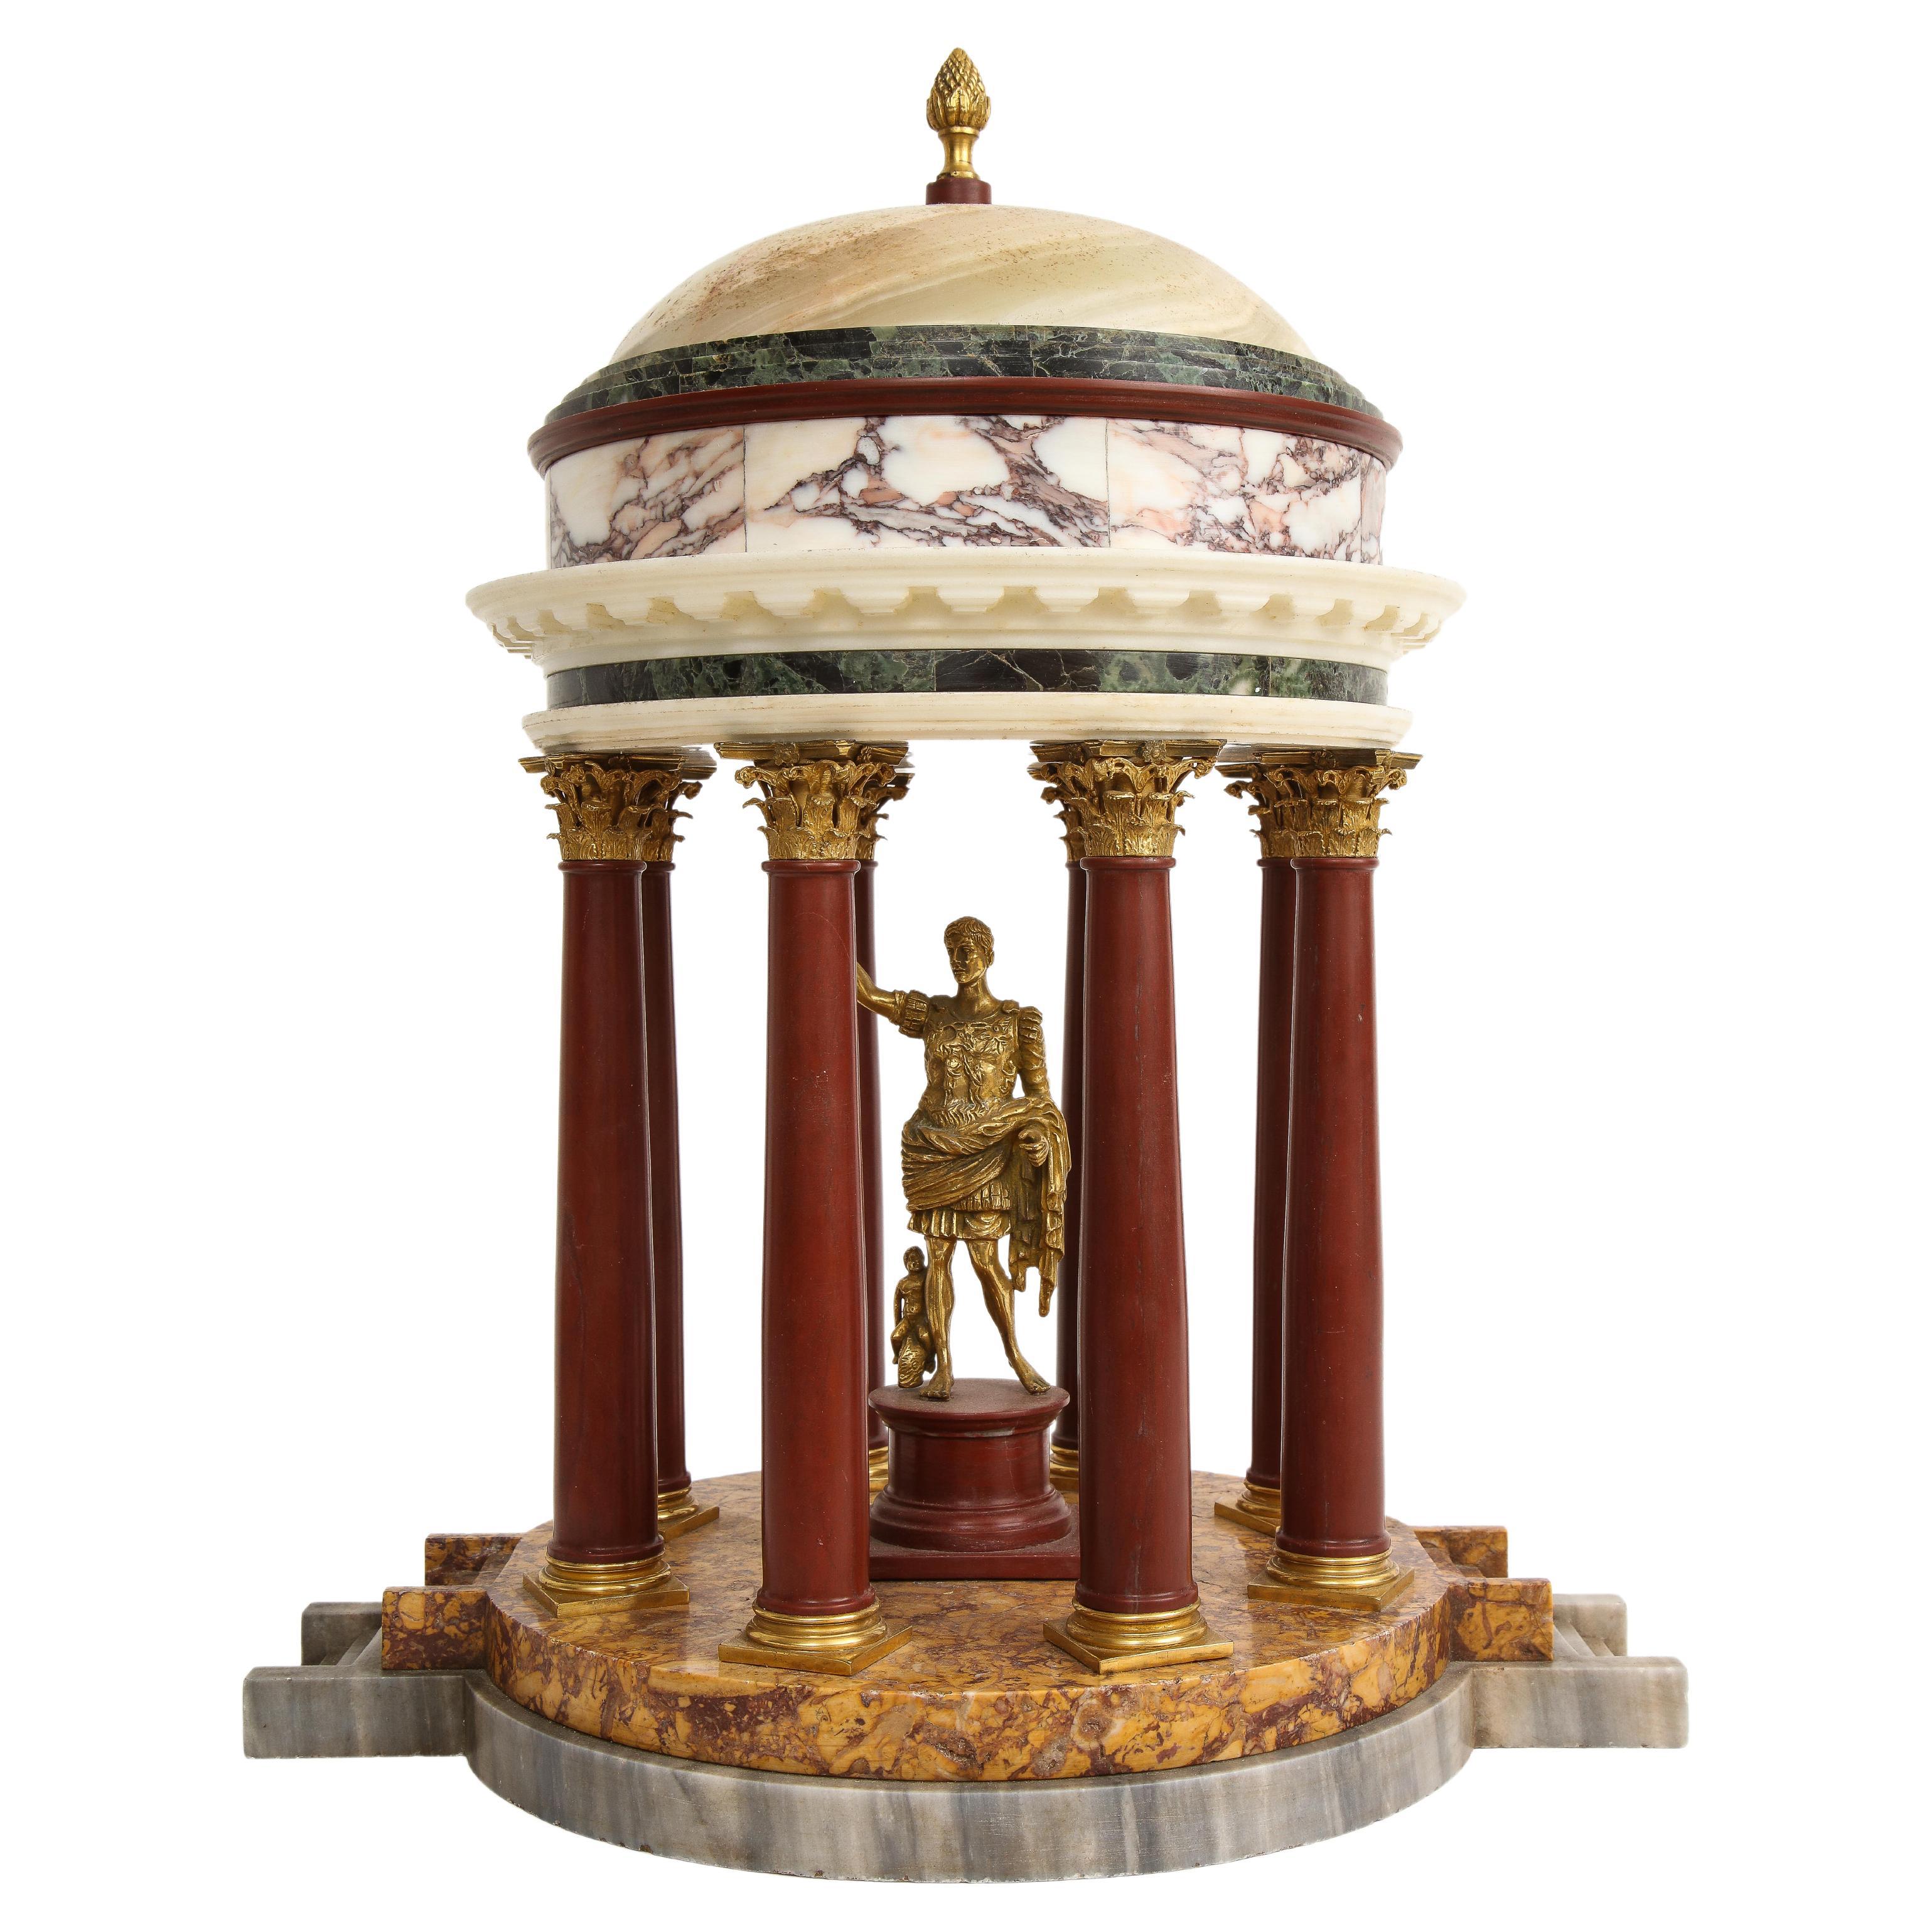 19th Century Italian Ormolu Mounted Multi-Marble Julius Caesar Coliseum Model For Sale